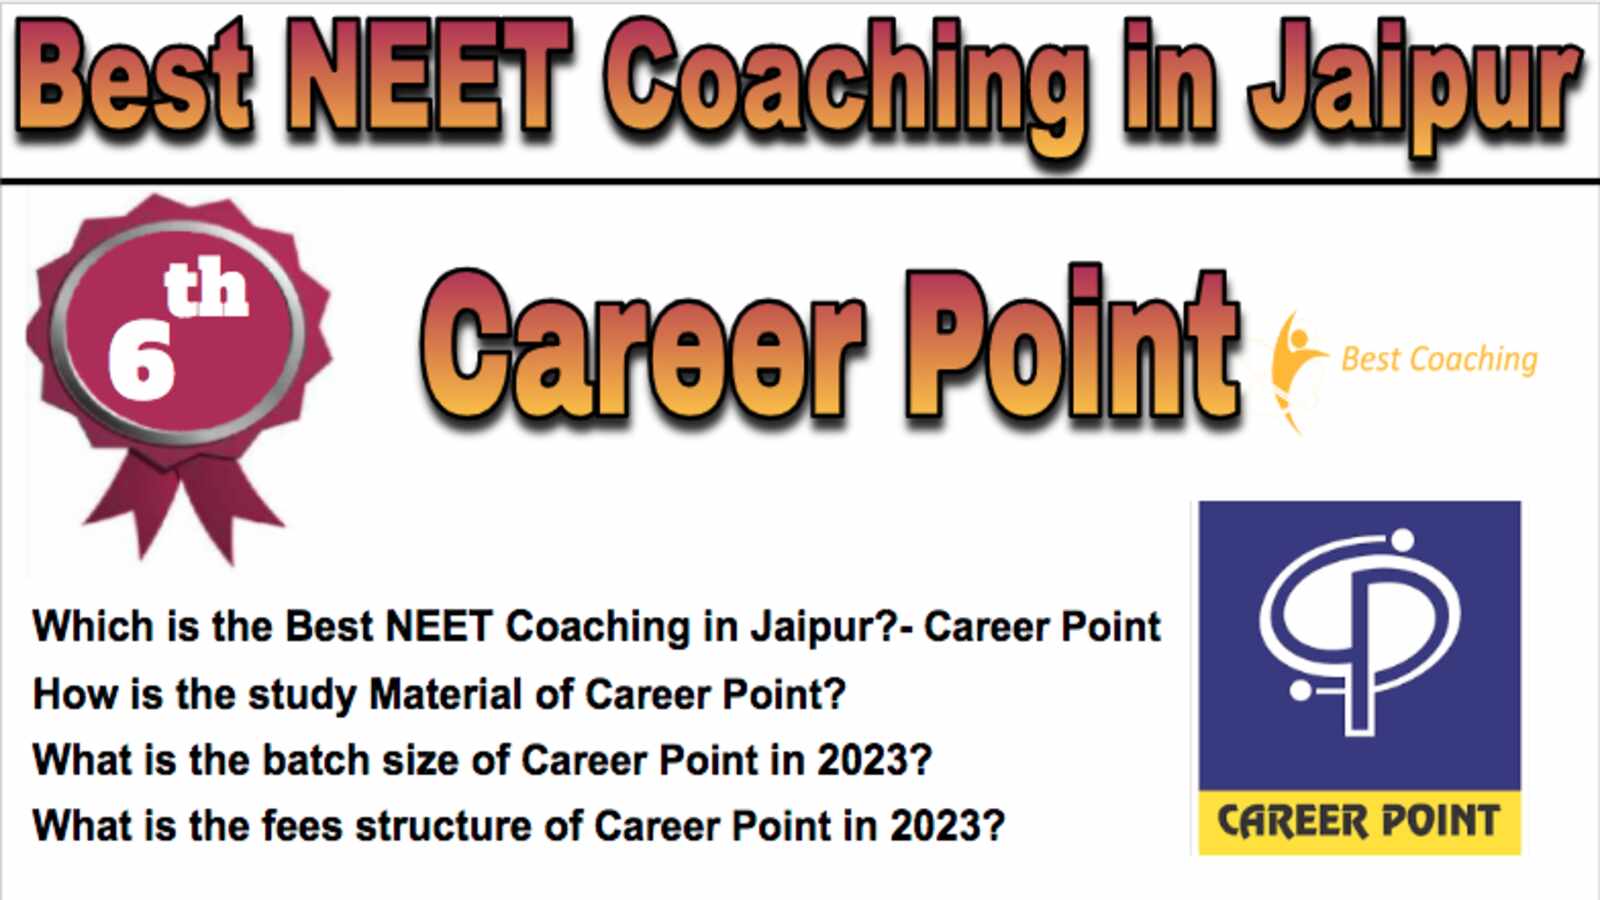 Rank 6 Best NEET Coaching in Jaipur